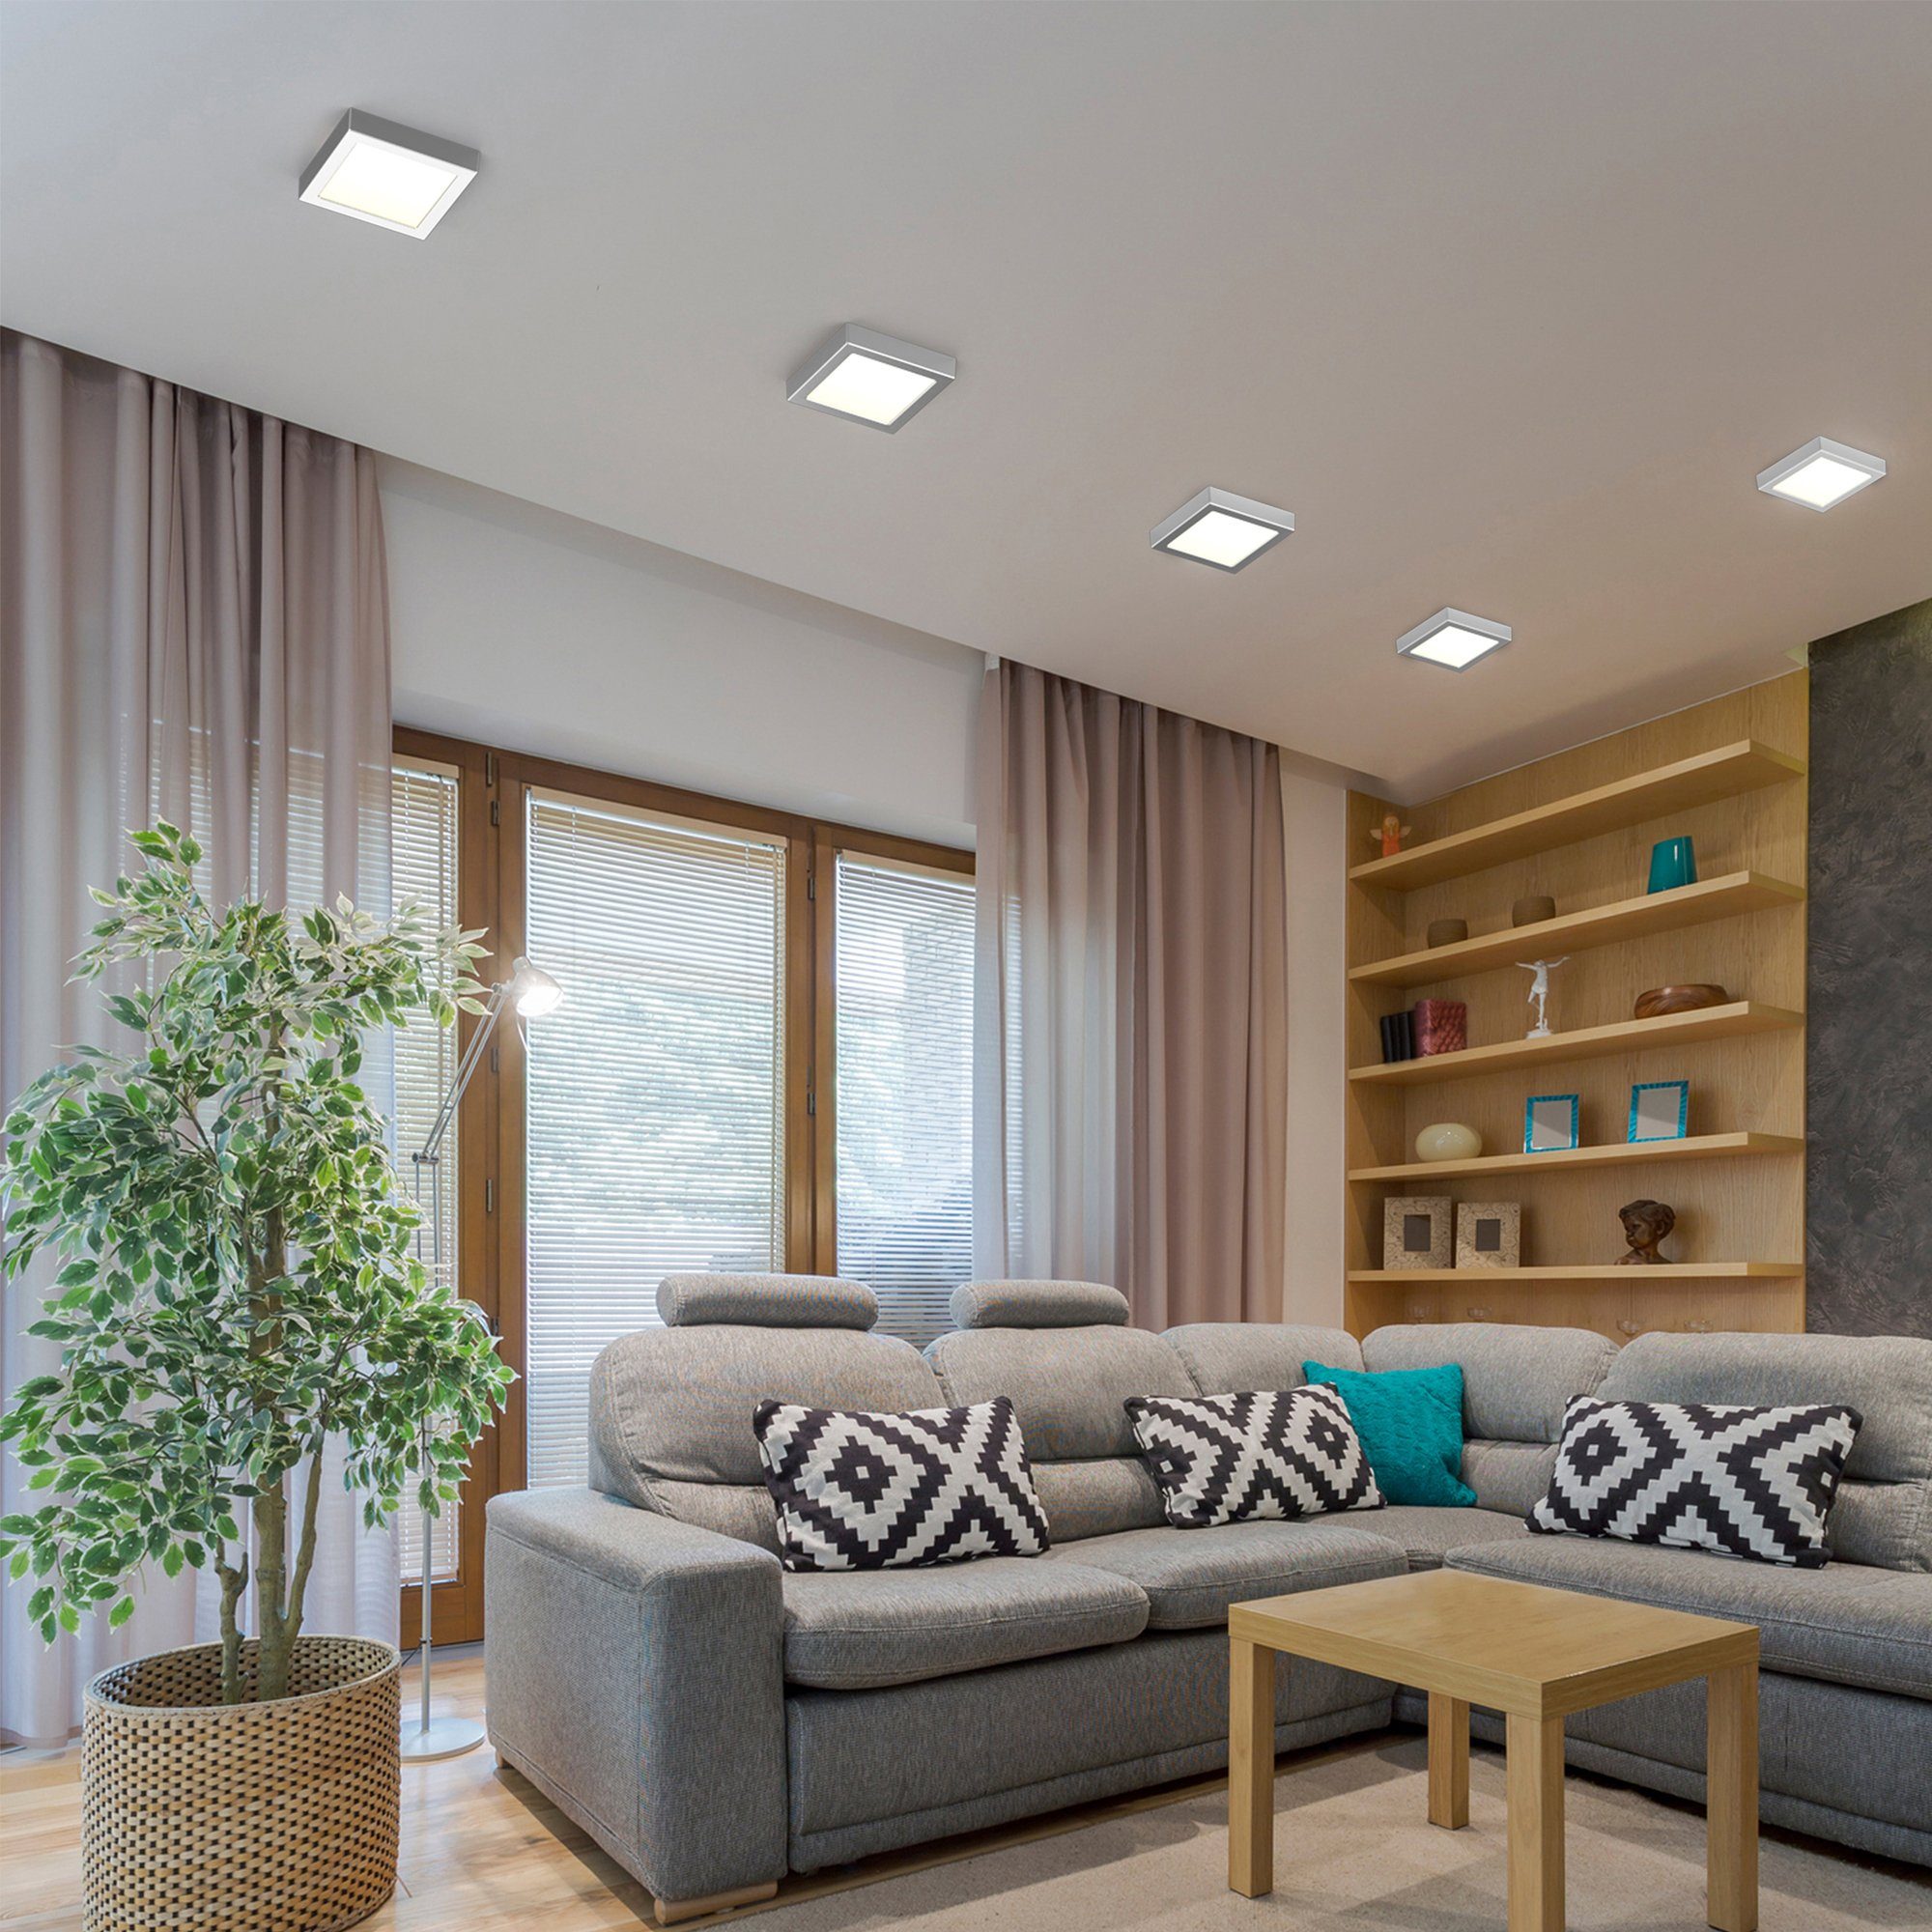 B.K.Licht Garnet, Aufputzspot LED 12W Warmweiß, integriert, fest LED Panel Aufbauleuchte LED Unterbauleuchte Lampe Aufbaustrahler